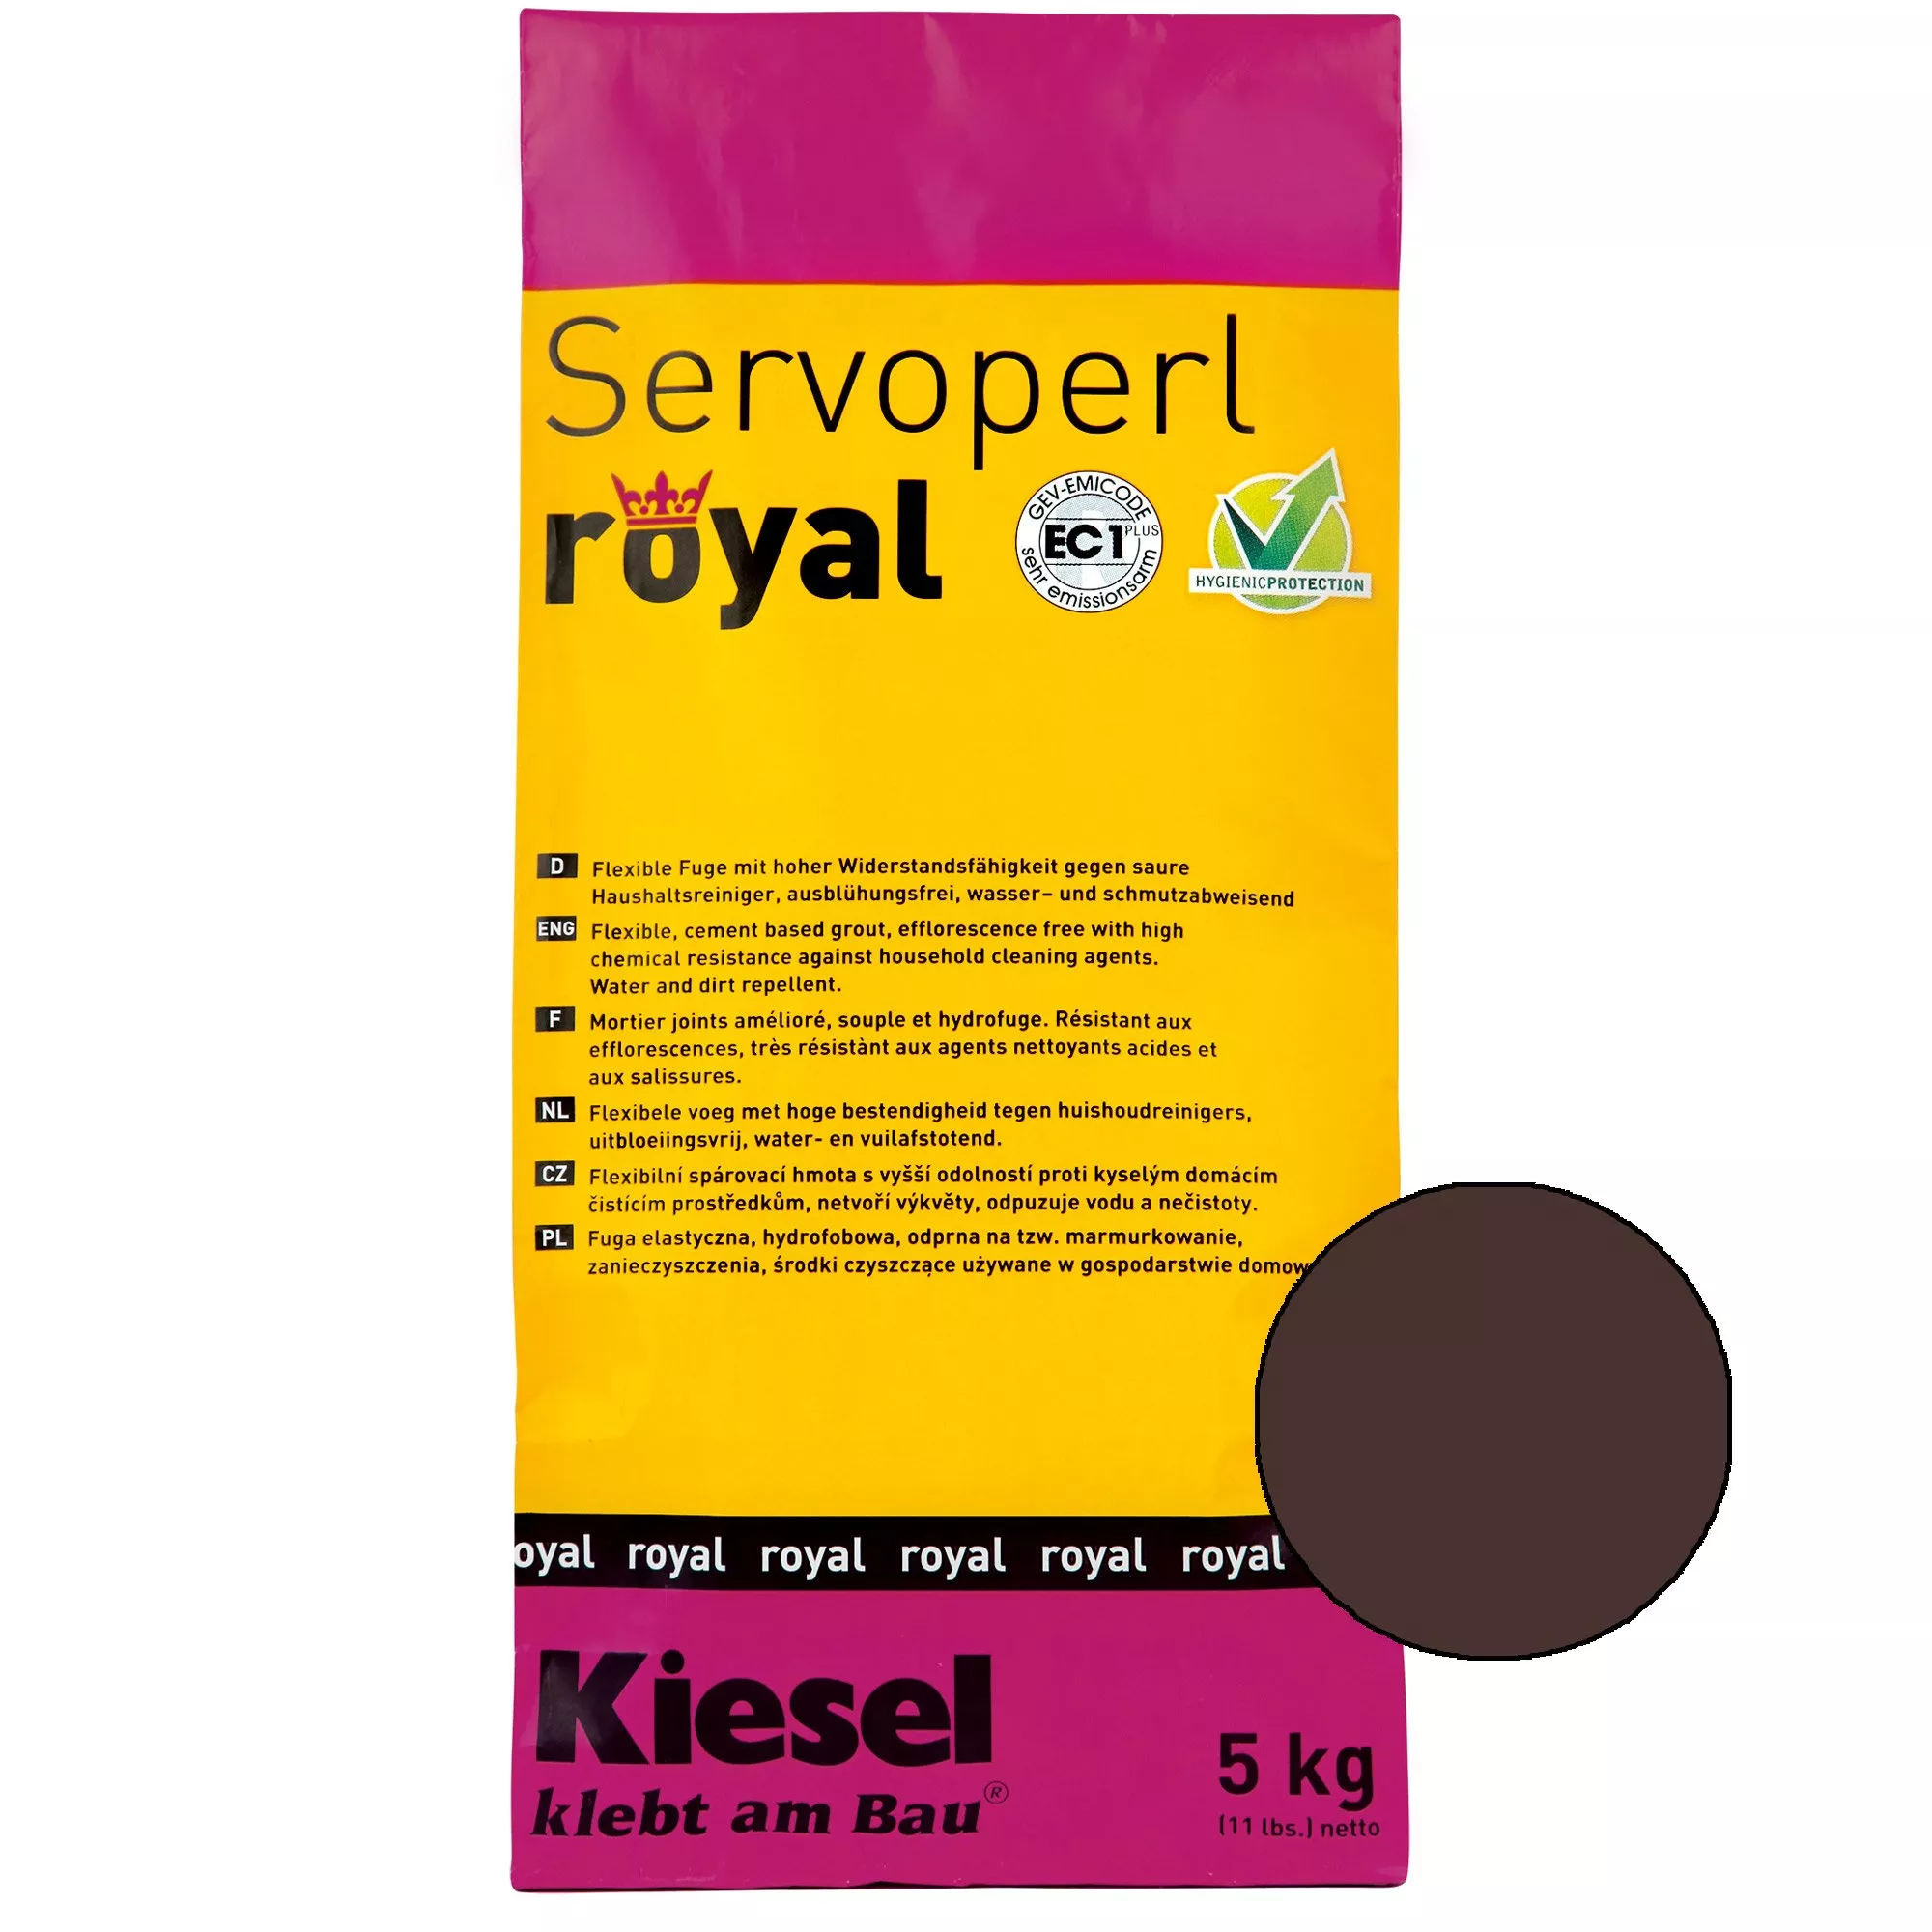 Kiesel Servoperl Royal - Flexibele, Water- En Vuilafstotende Voeg (5KG Balibraun)